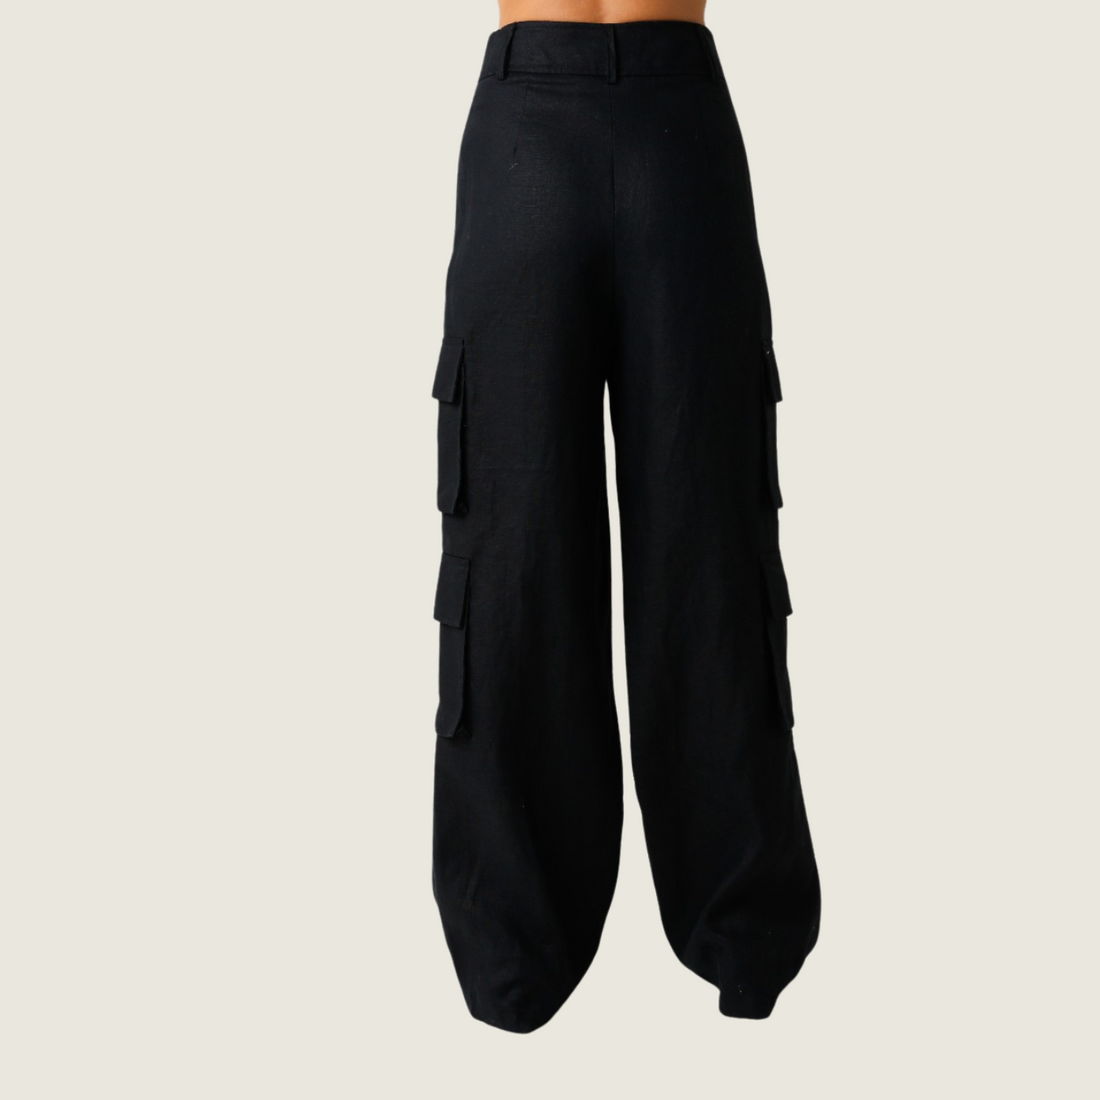 Black Linen Trousers - Blackbird General Store